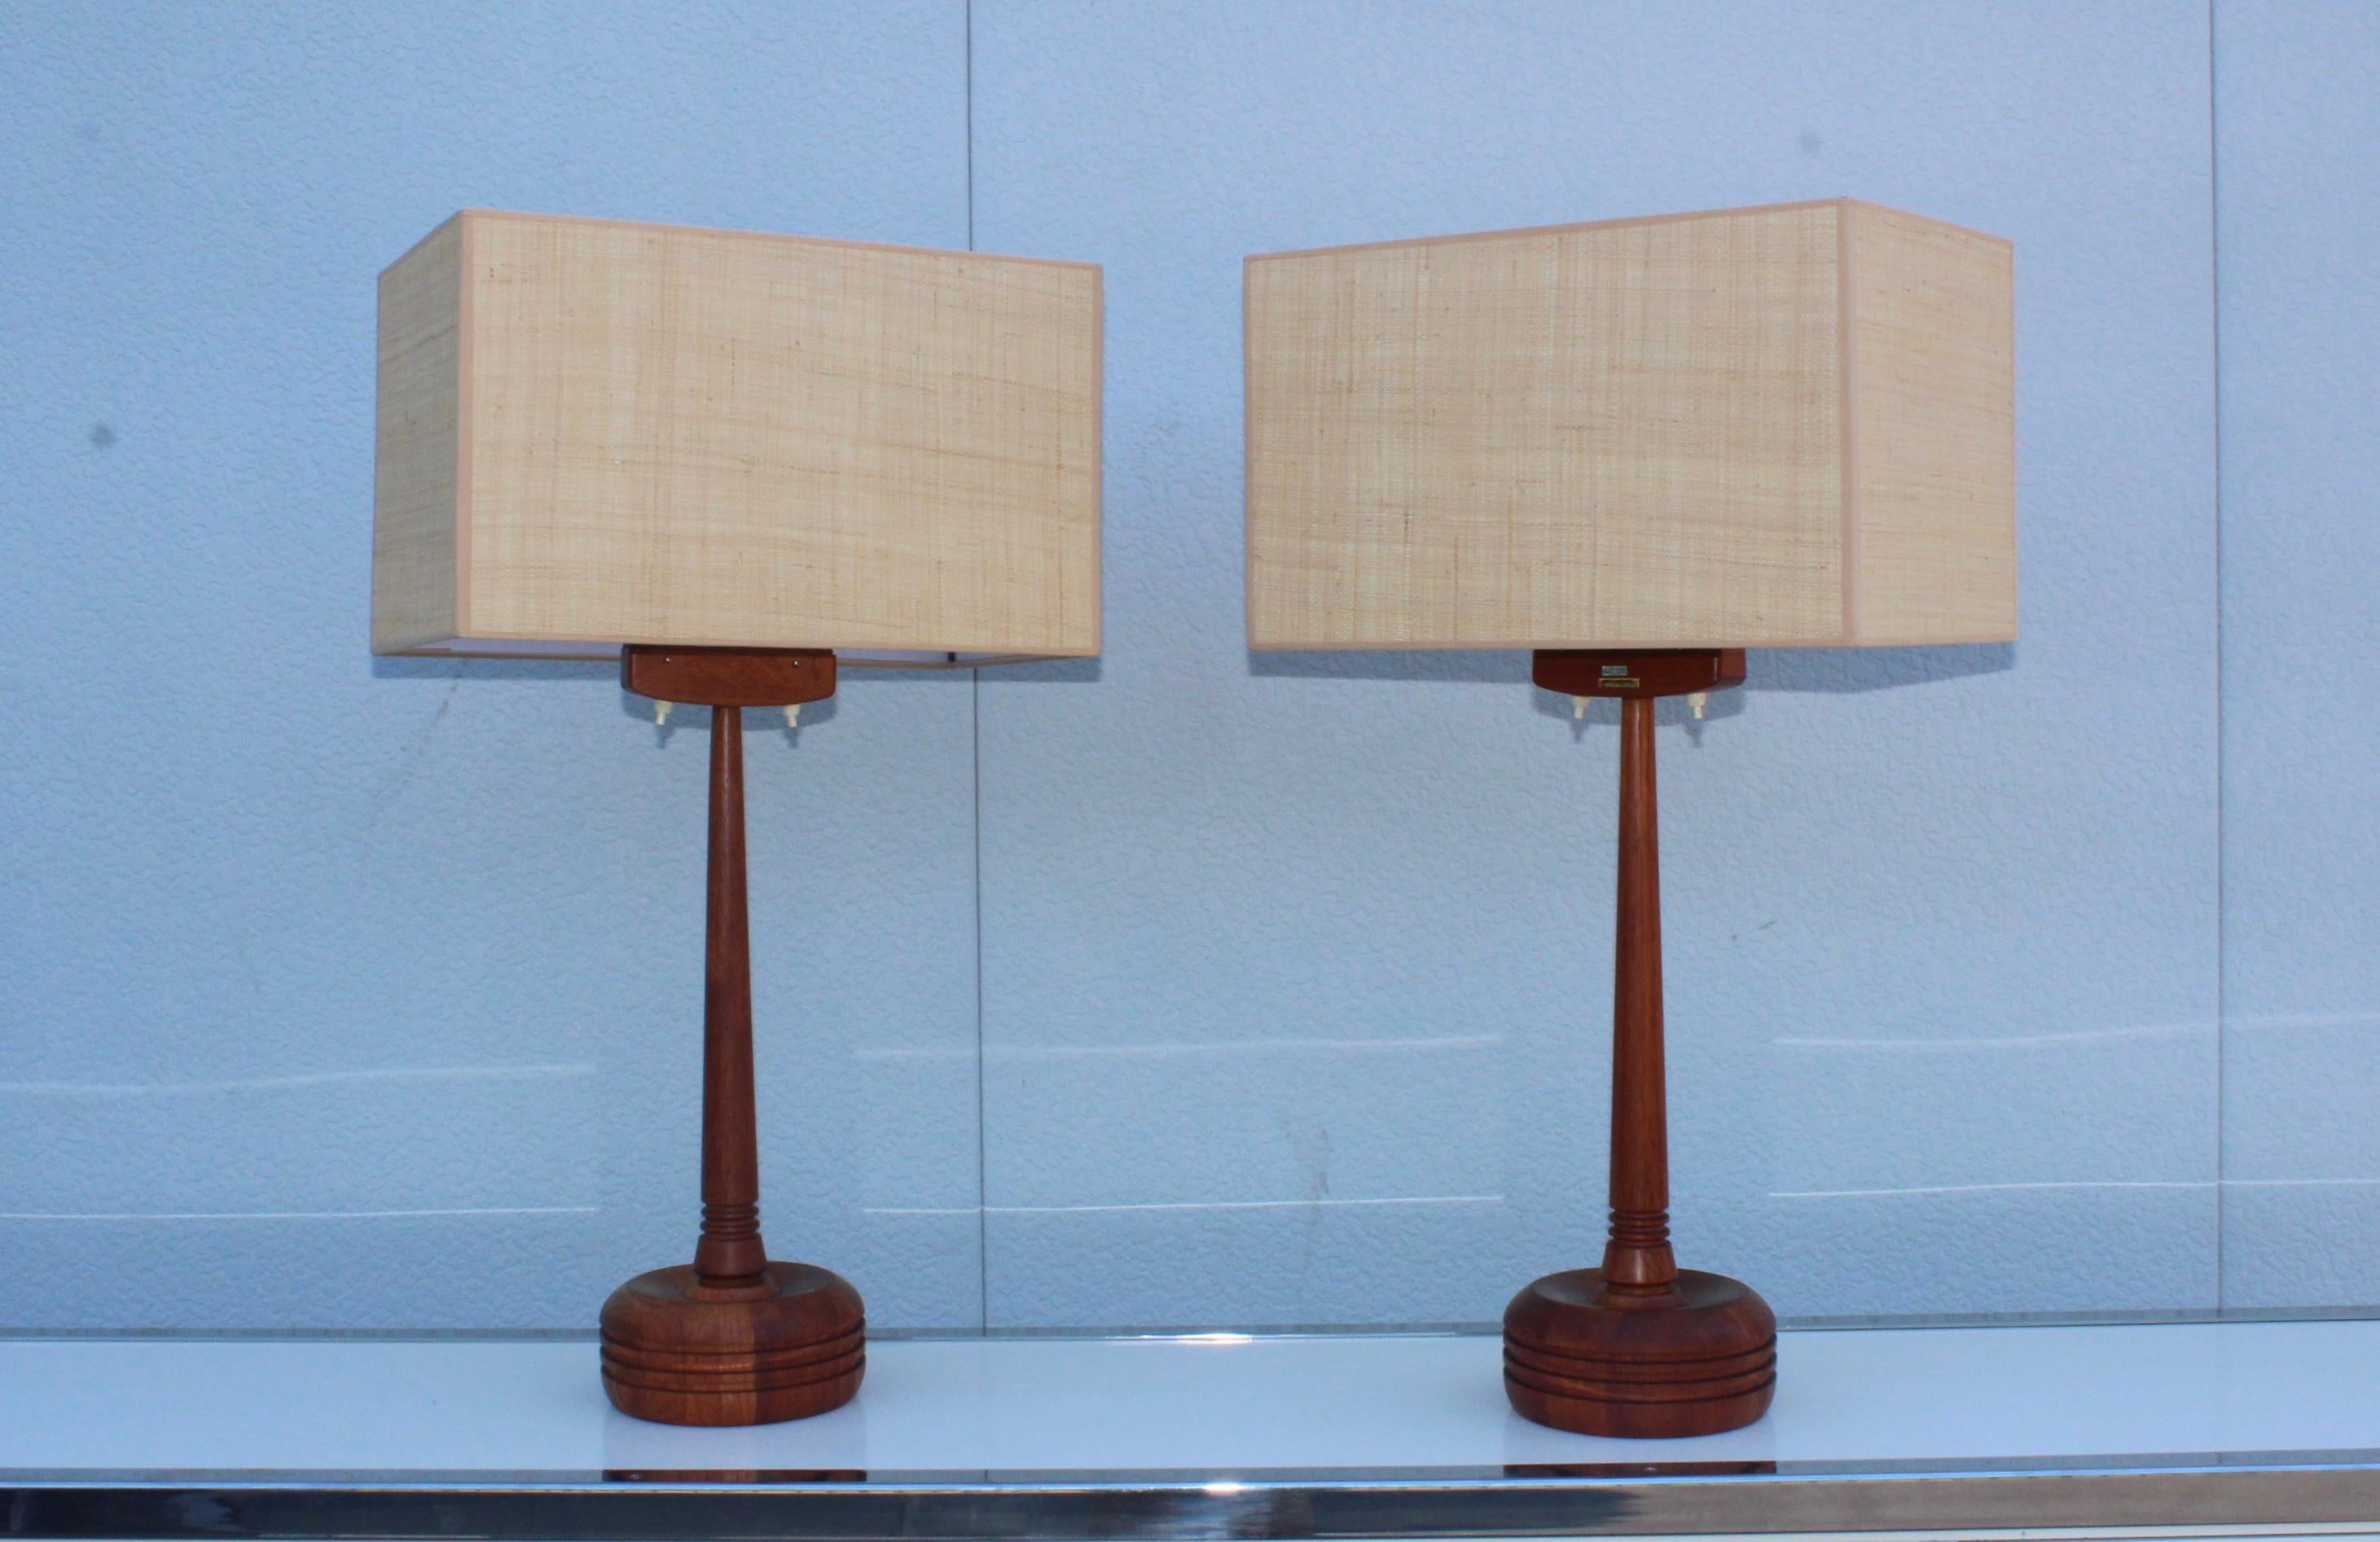 1960s solid teak table lamps attributed to Henrik Blomqvist for Stilarmatur Tranás, Sweden.

Shades for photography only.